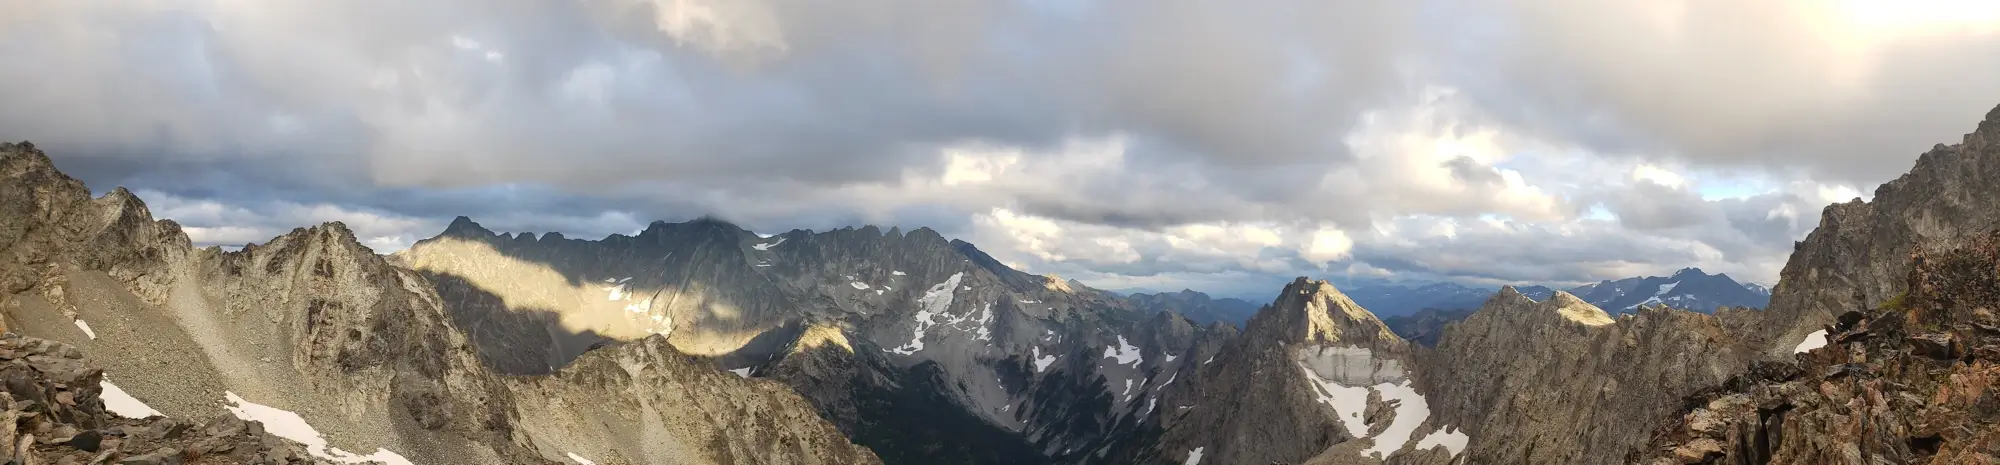 panorama from greenwood mountain summit